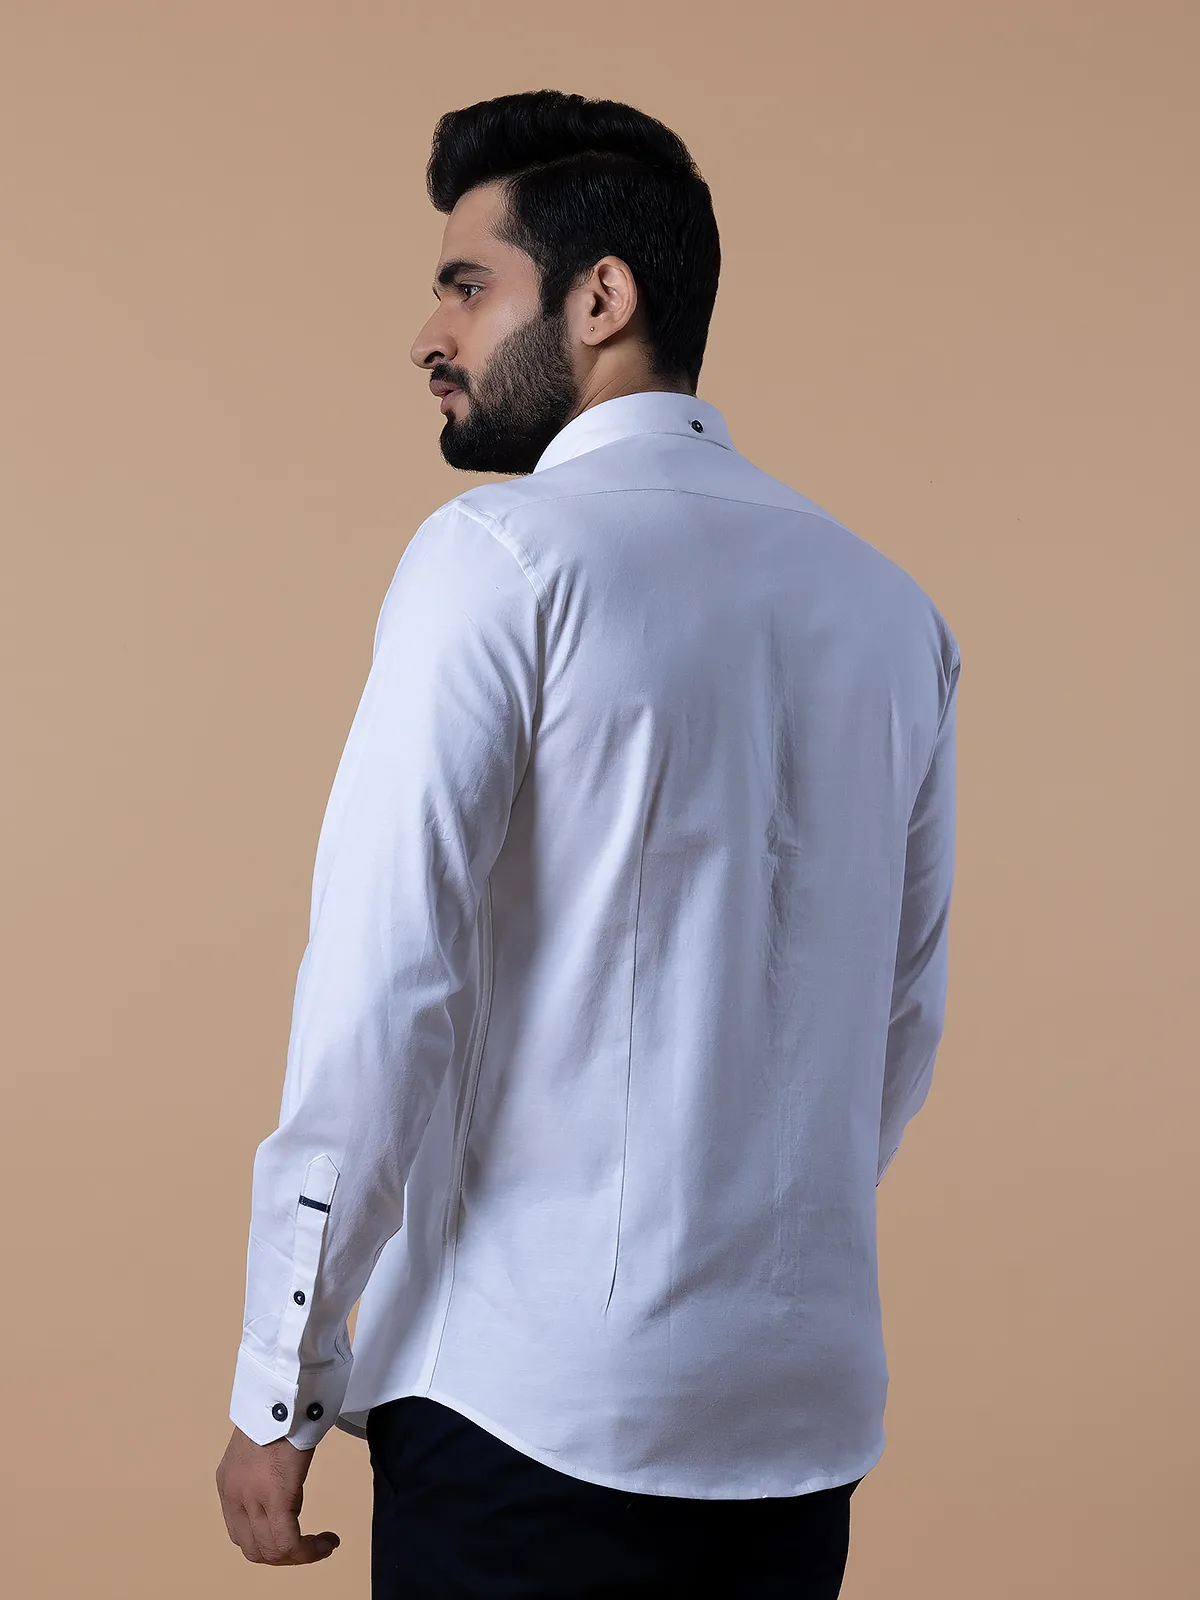 Frio white plain cotton slim fit casual shirt